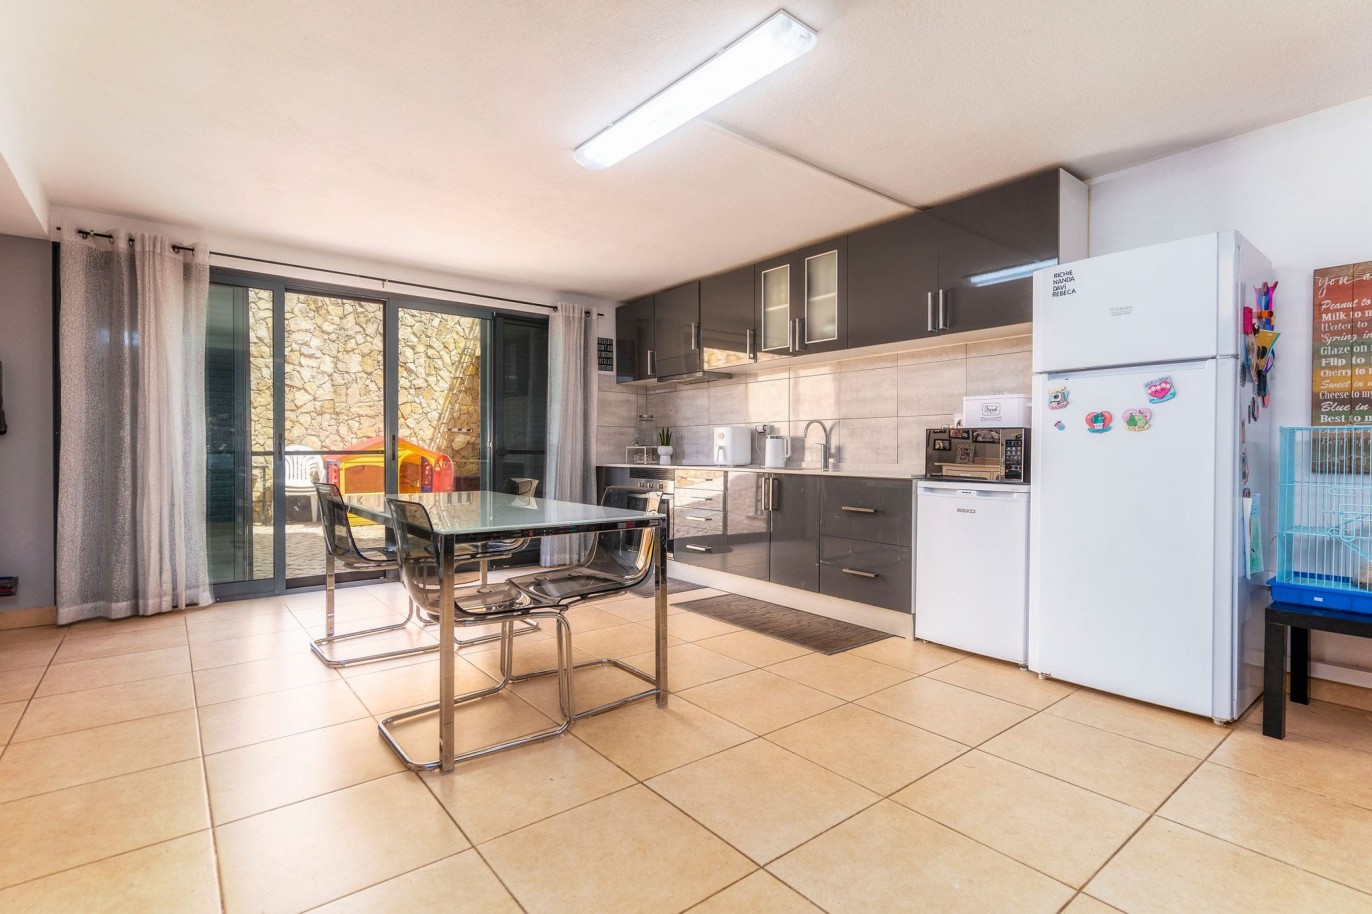 3+1 bedroom villa & 2 bedroom apartment for sale in Quarteira, Algarve_240753